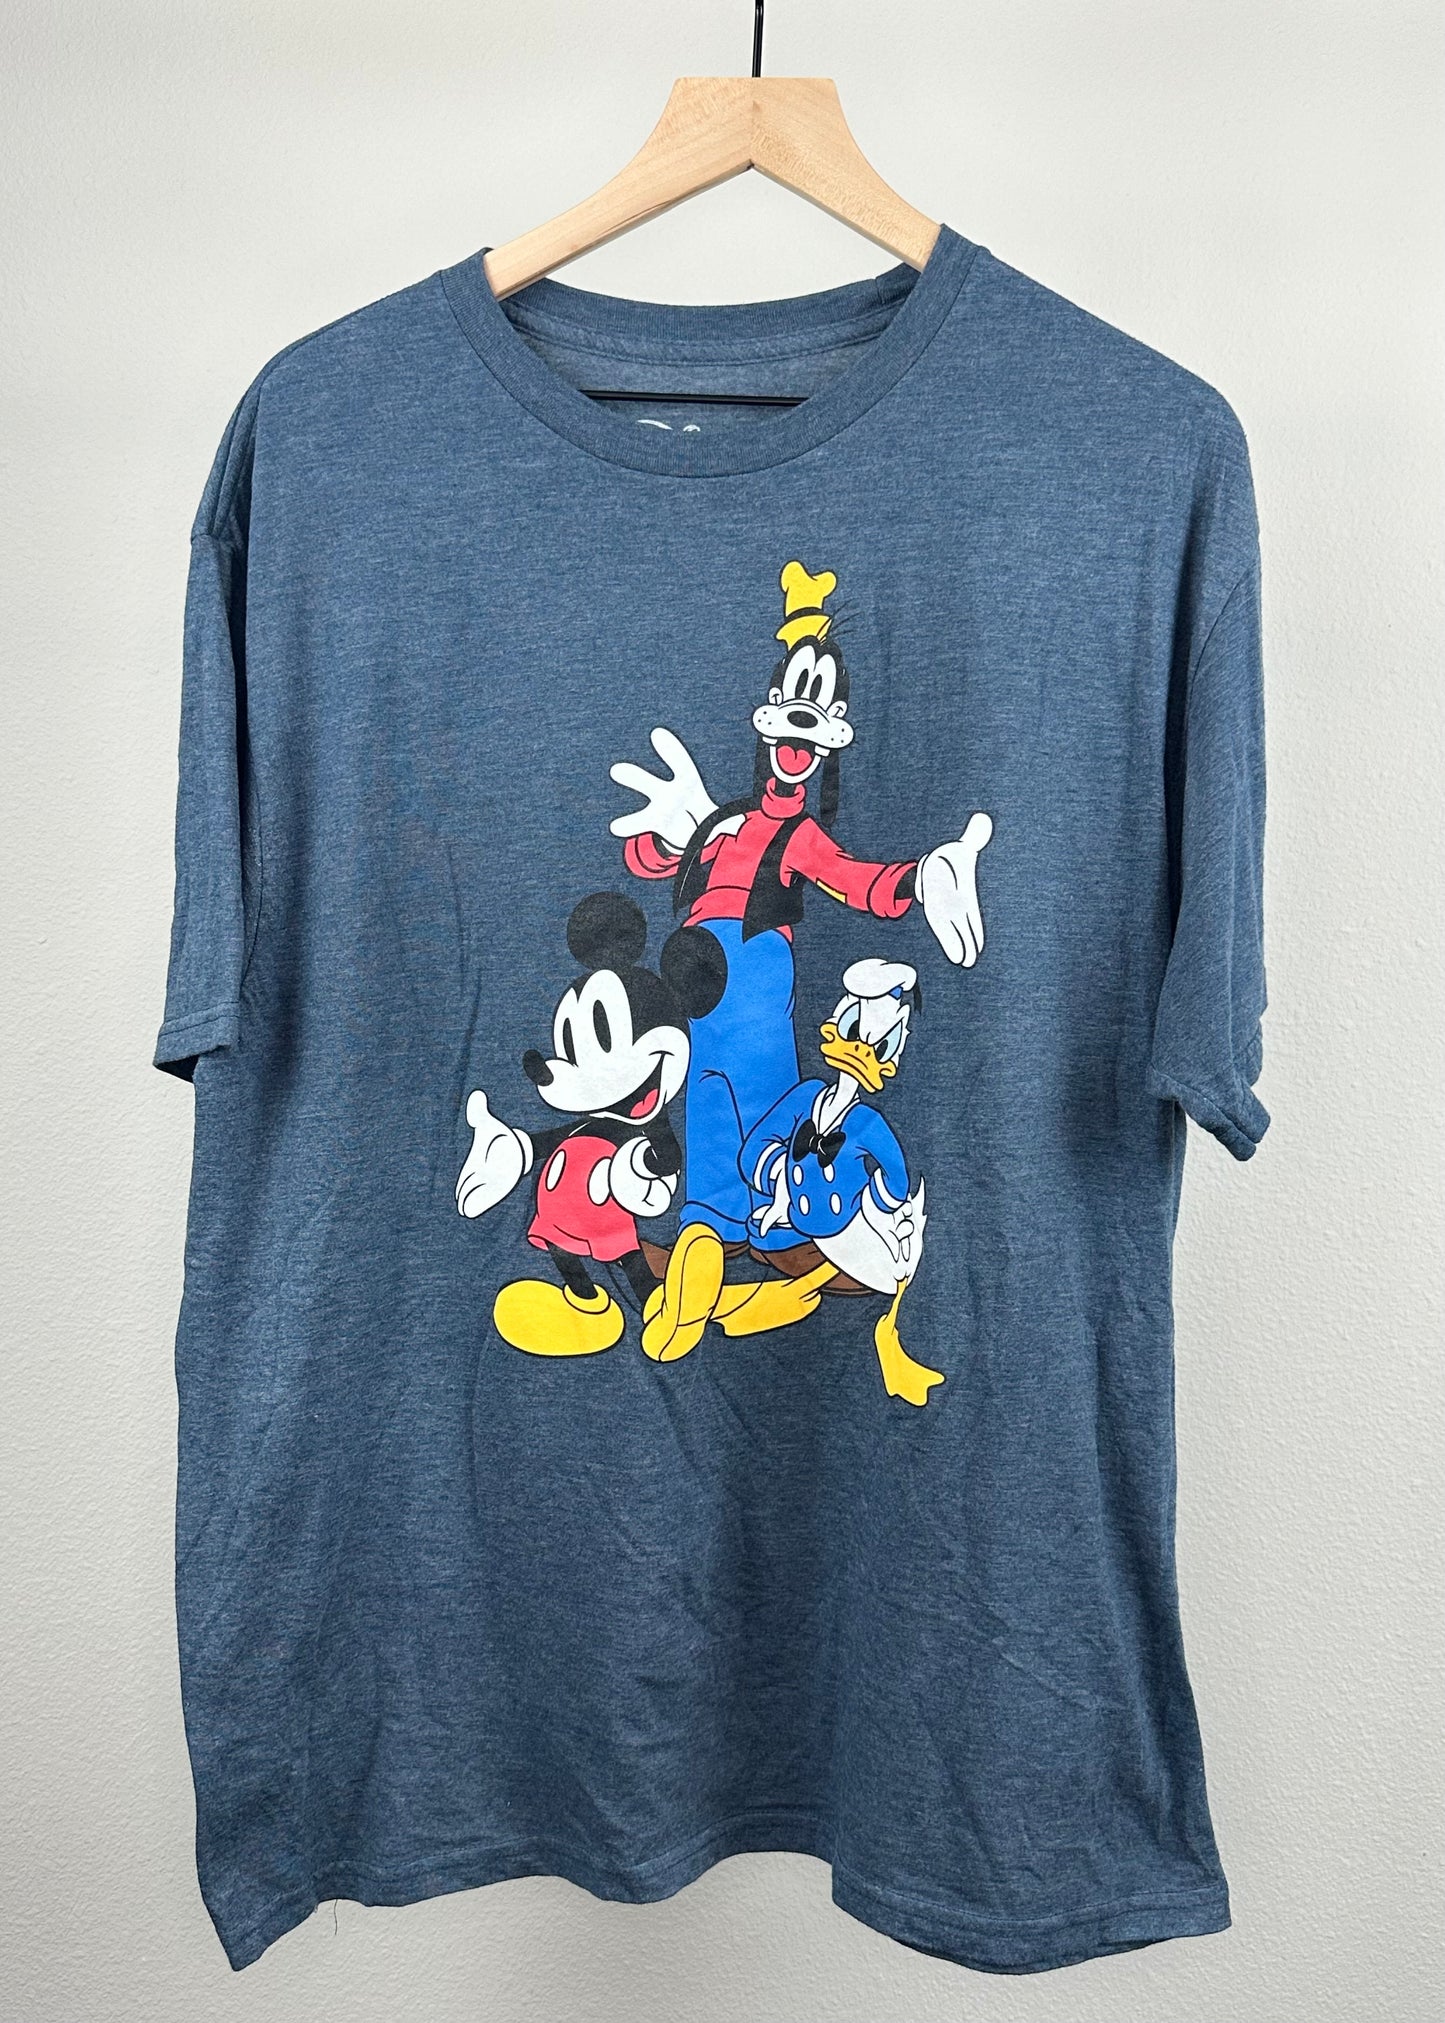 Mens Disney Character T-Shirt